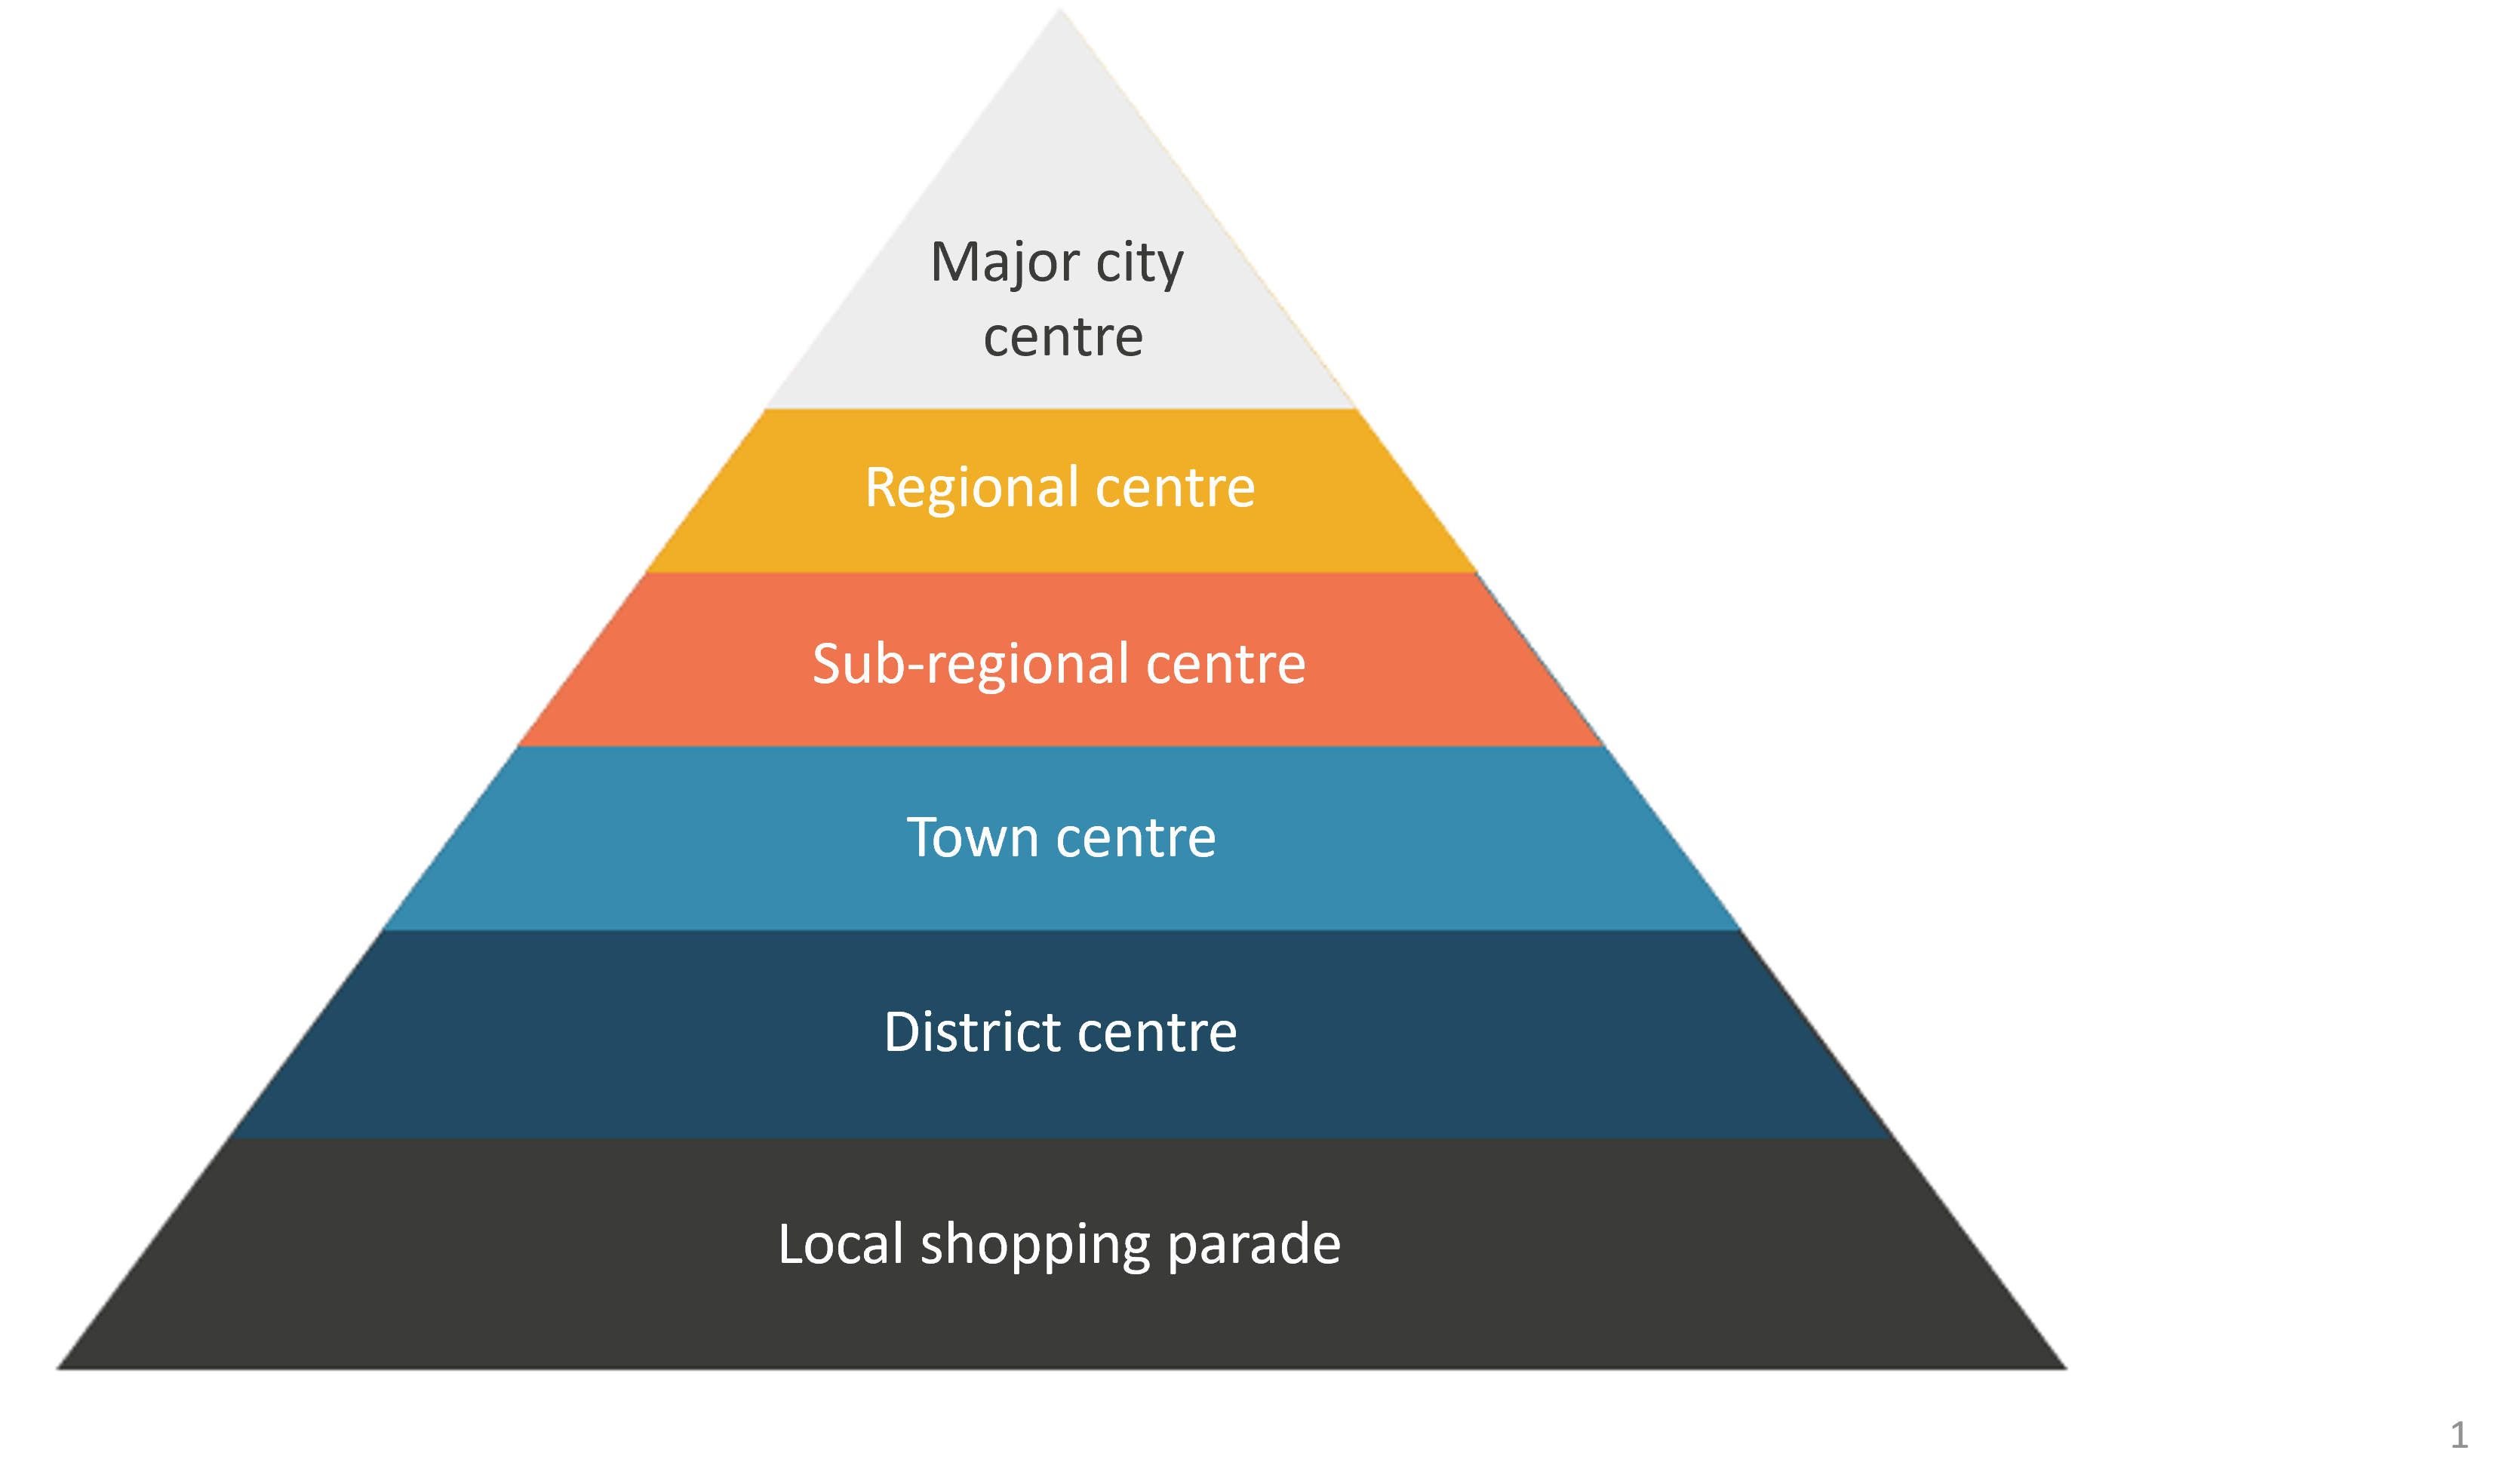 a pyramid image with major city centre at top and local shopping parade at bottom